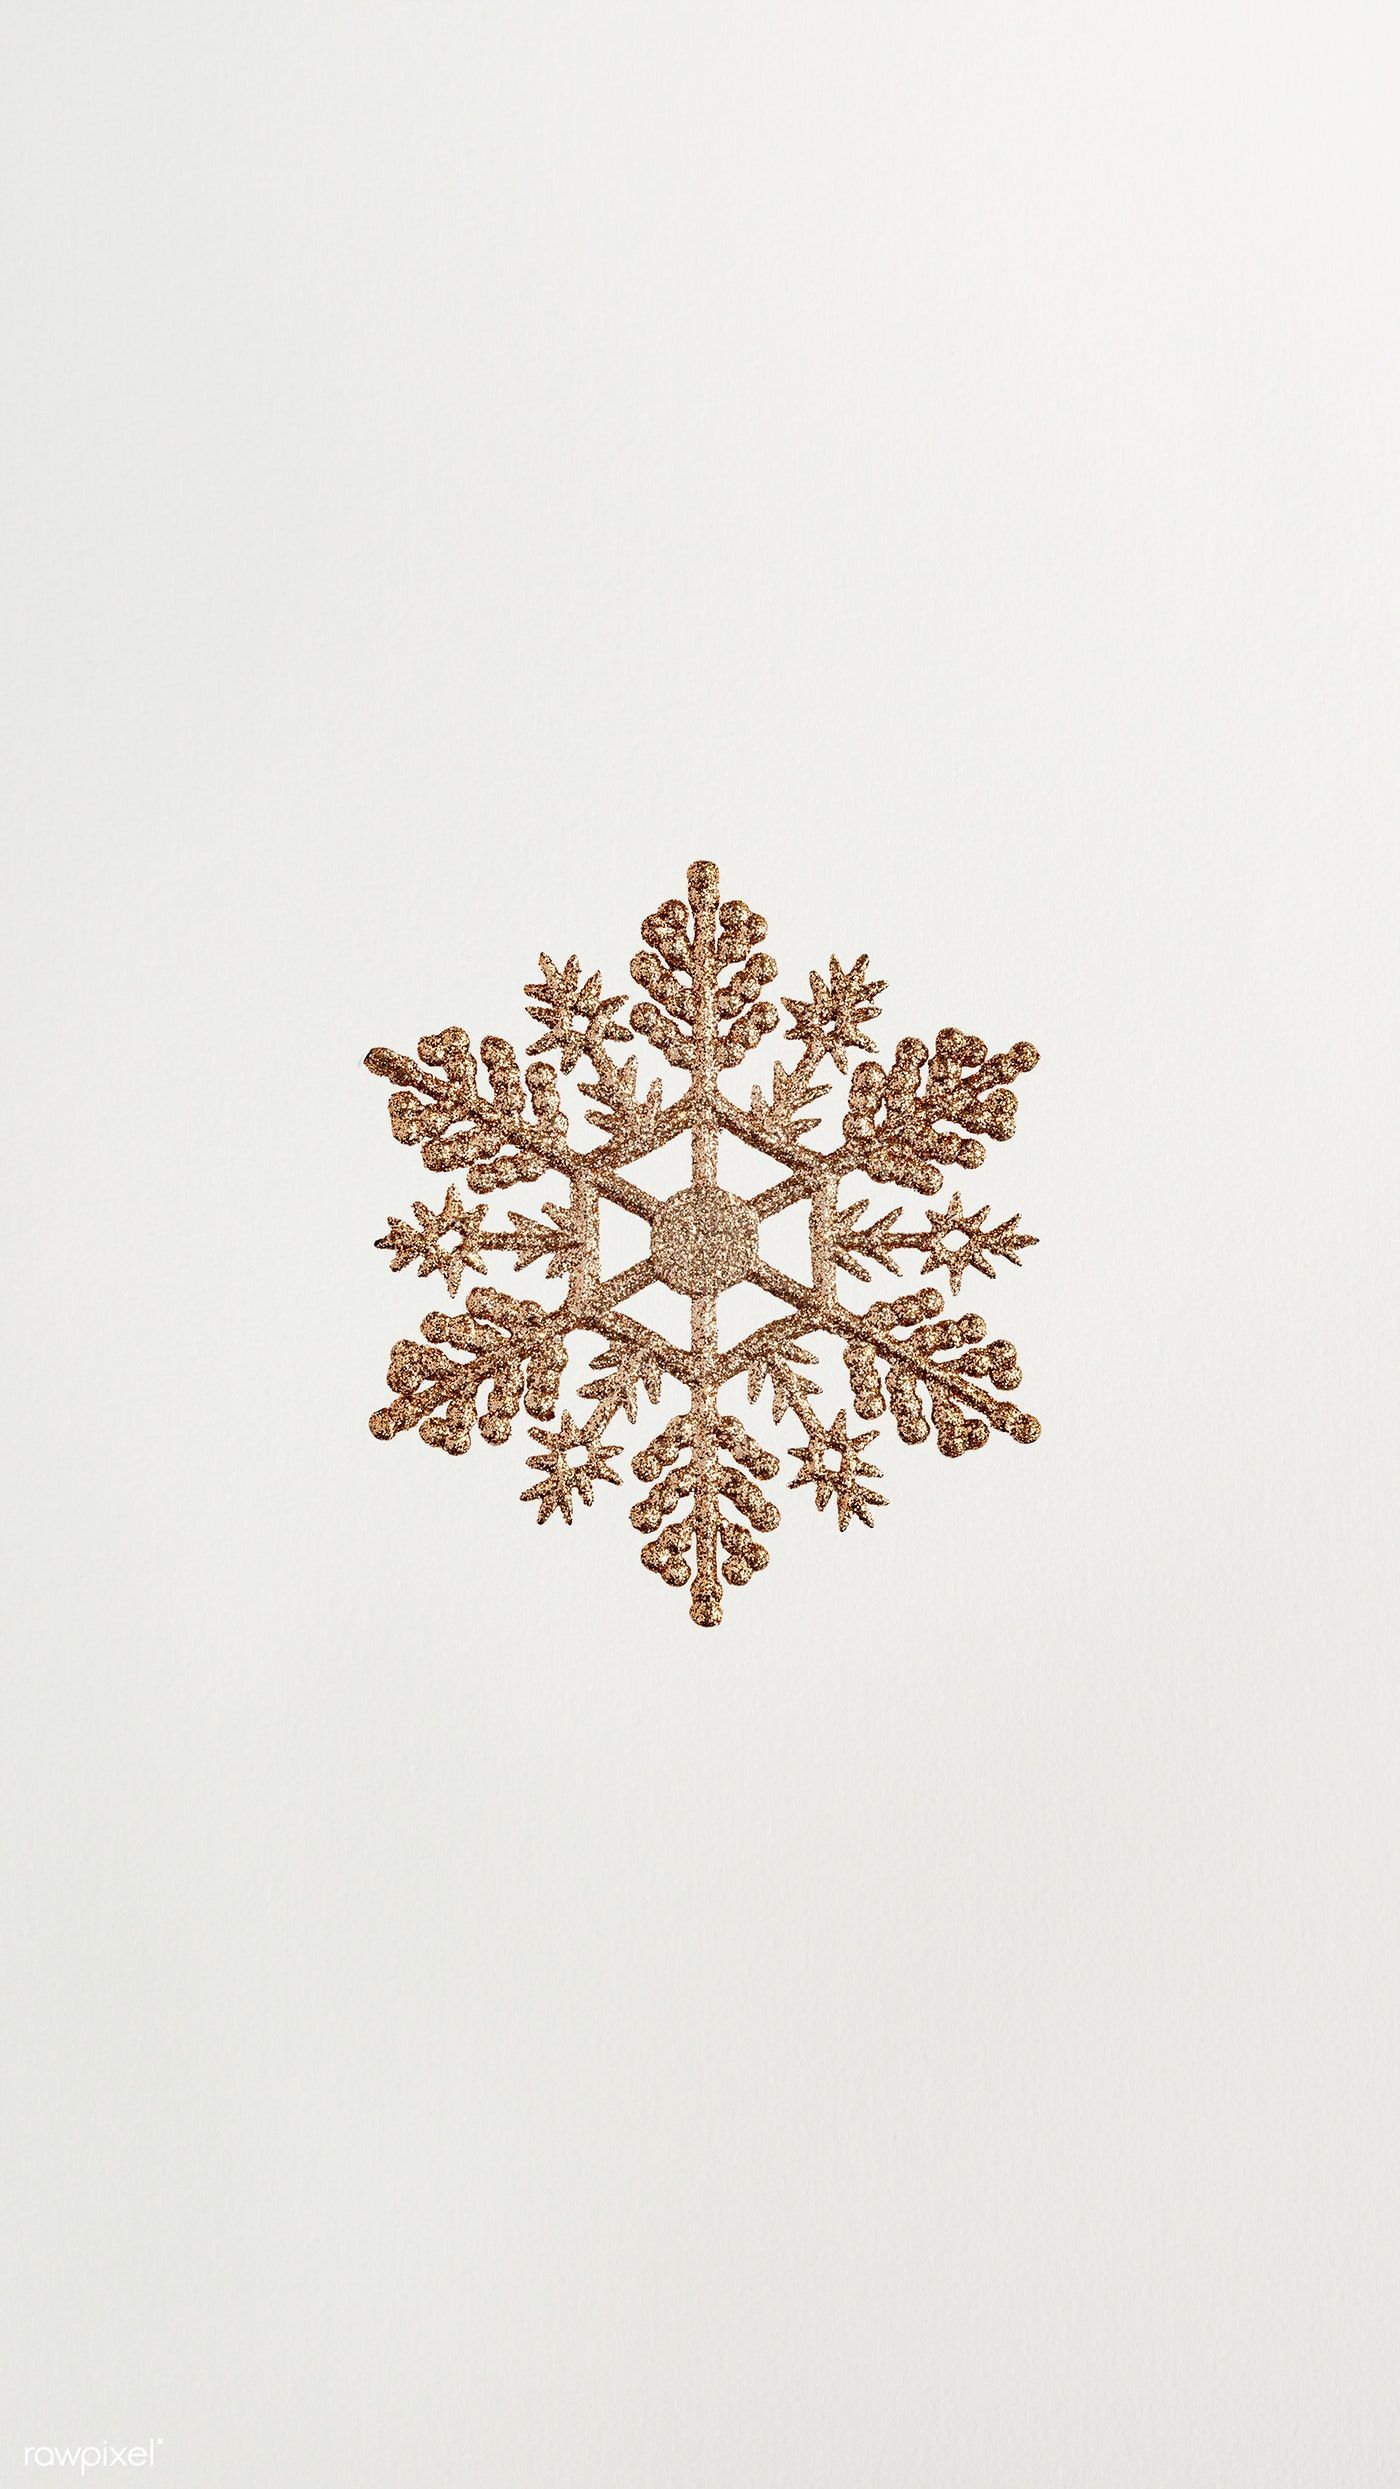 Copper snowflake mobile phone wallpaper. premium image / sasi. Phone wallpaper, Flower background wallpaper, iPhone wallpaper